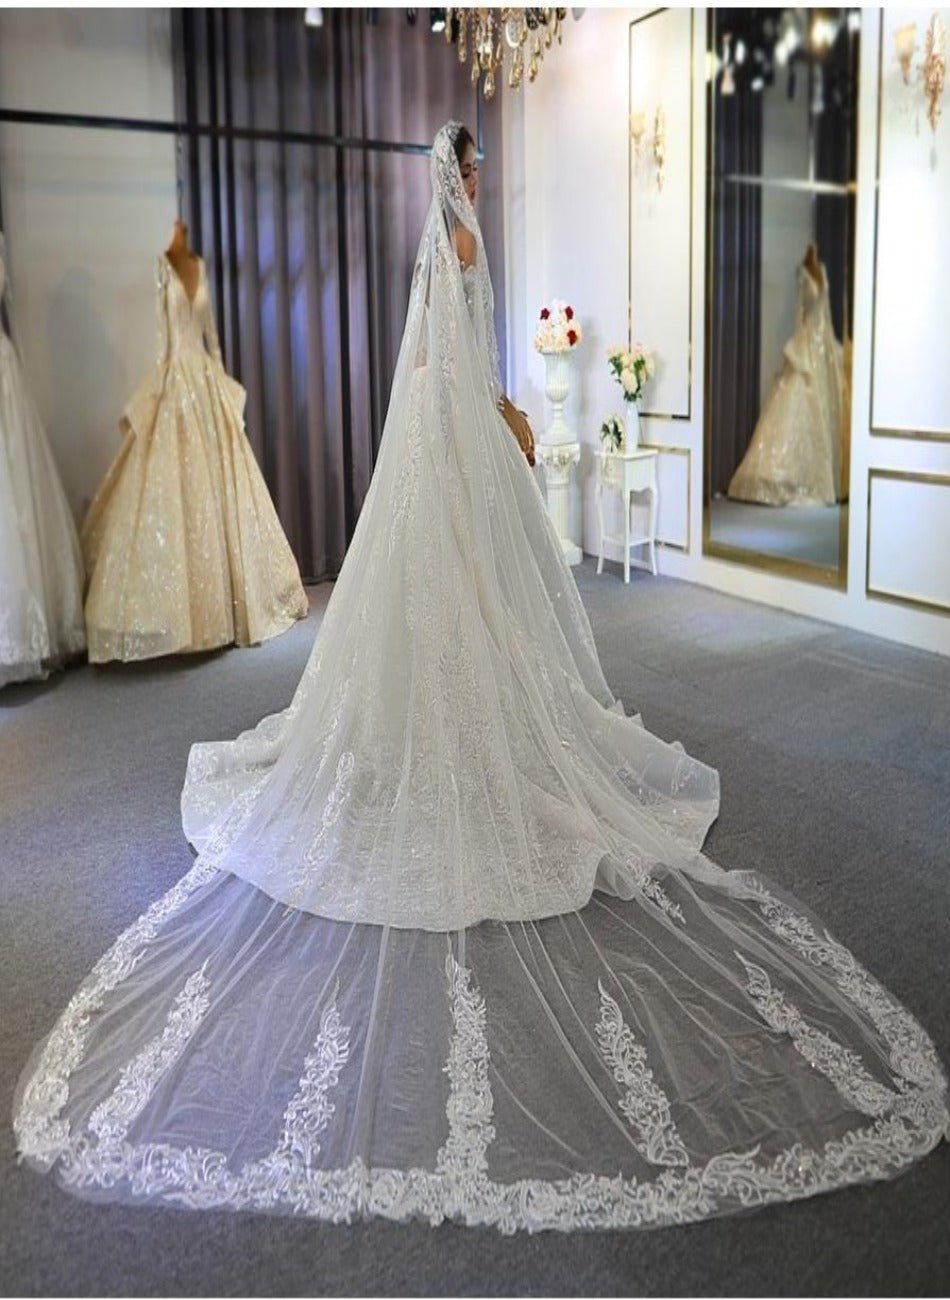 Long lace veil 2020 wedding veil - Mscooco.co.uk